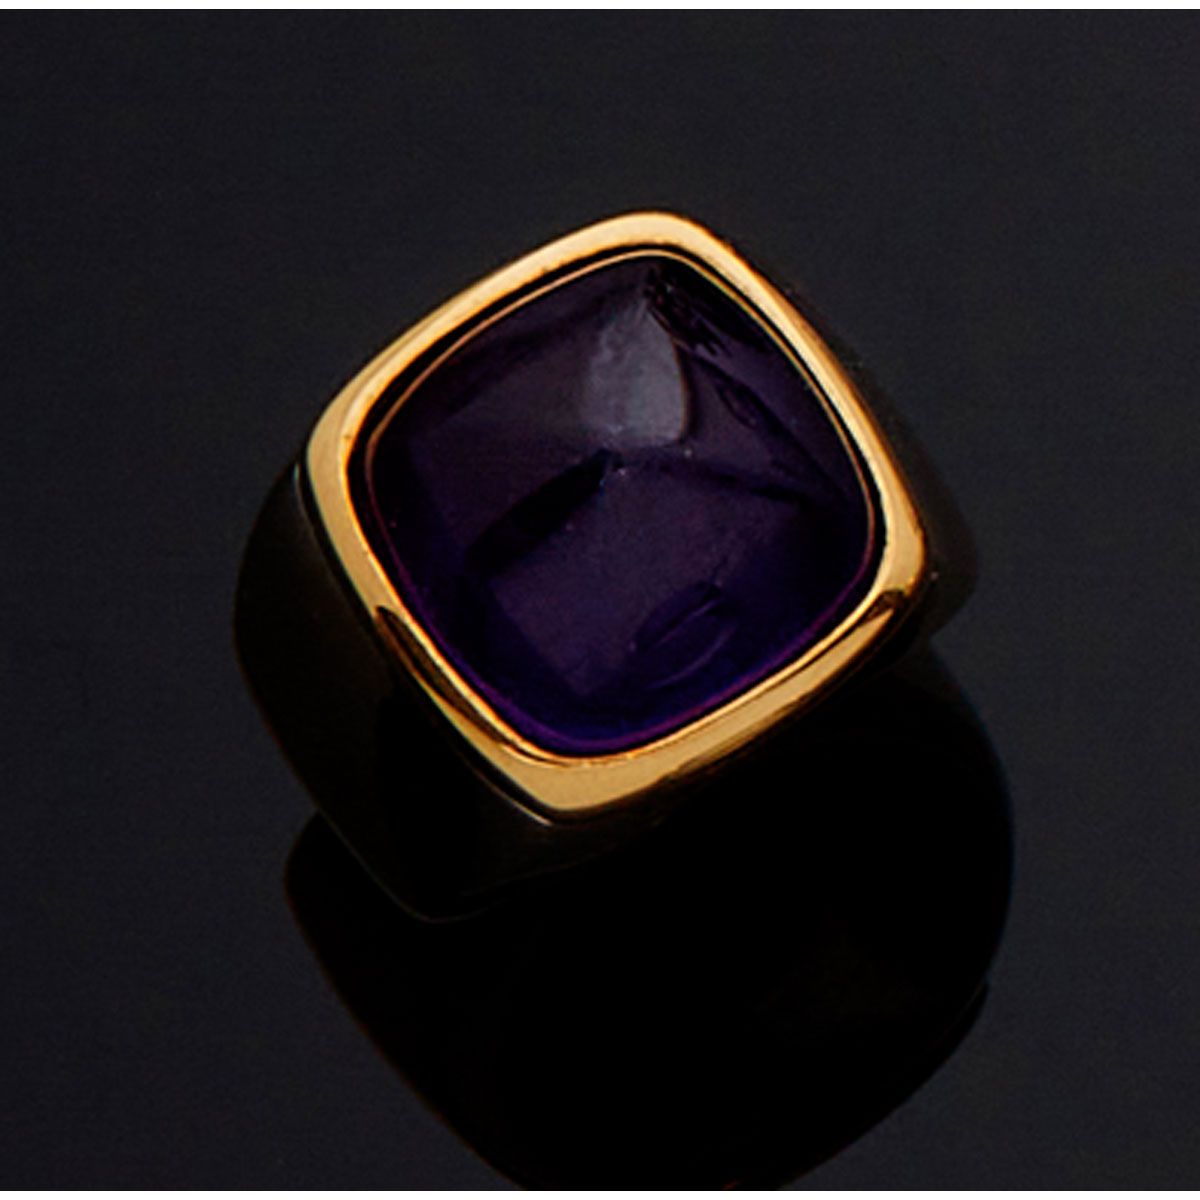 Null 弗雷德。双色18K金戒指，镶嵌有糖块紫水晶，签名为Fred并有编号。

B.P. 22.8g。- TDD 53